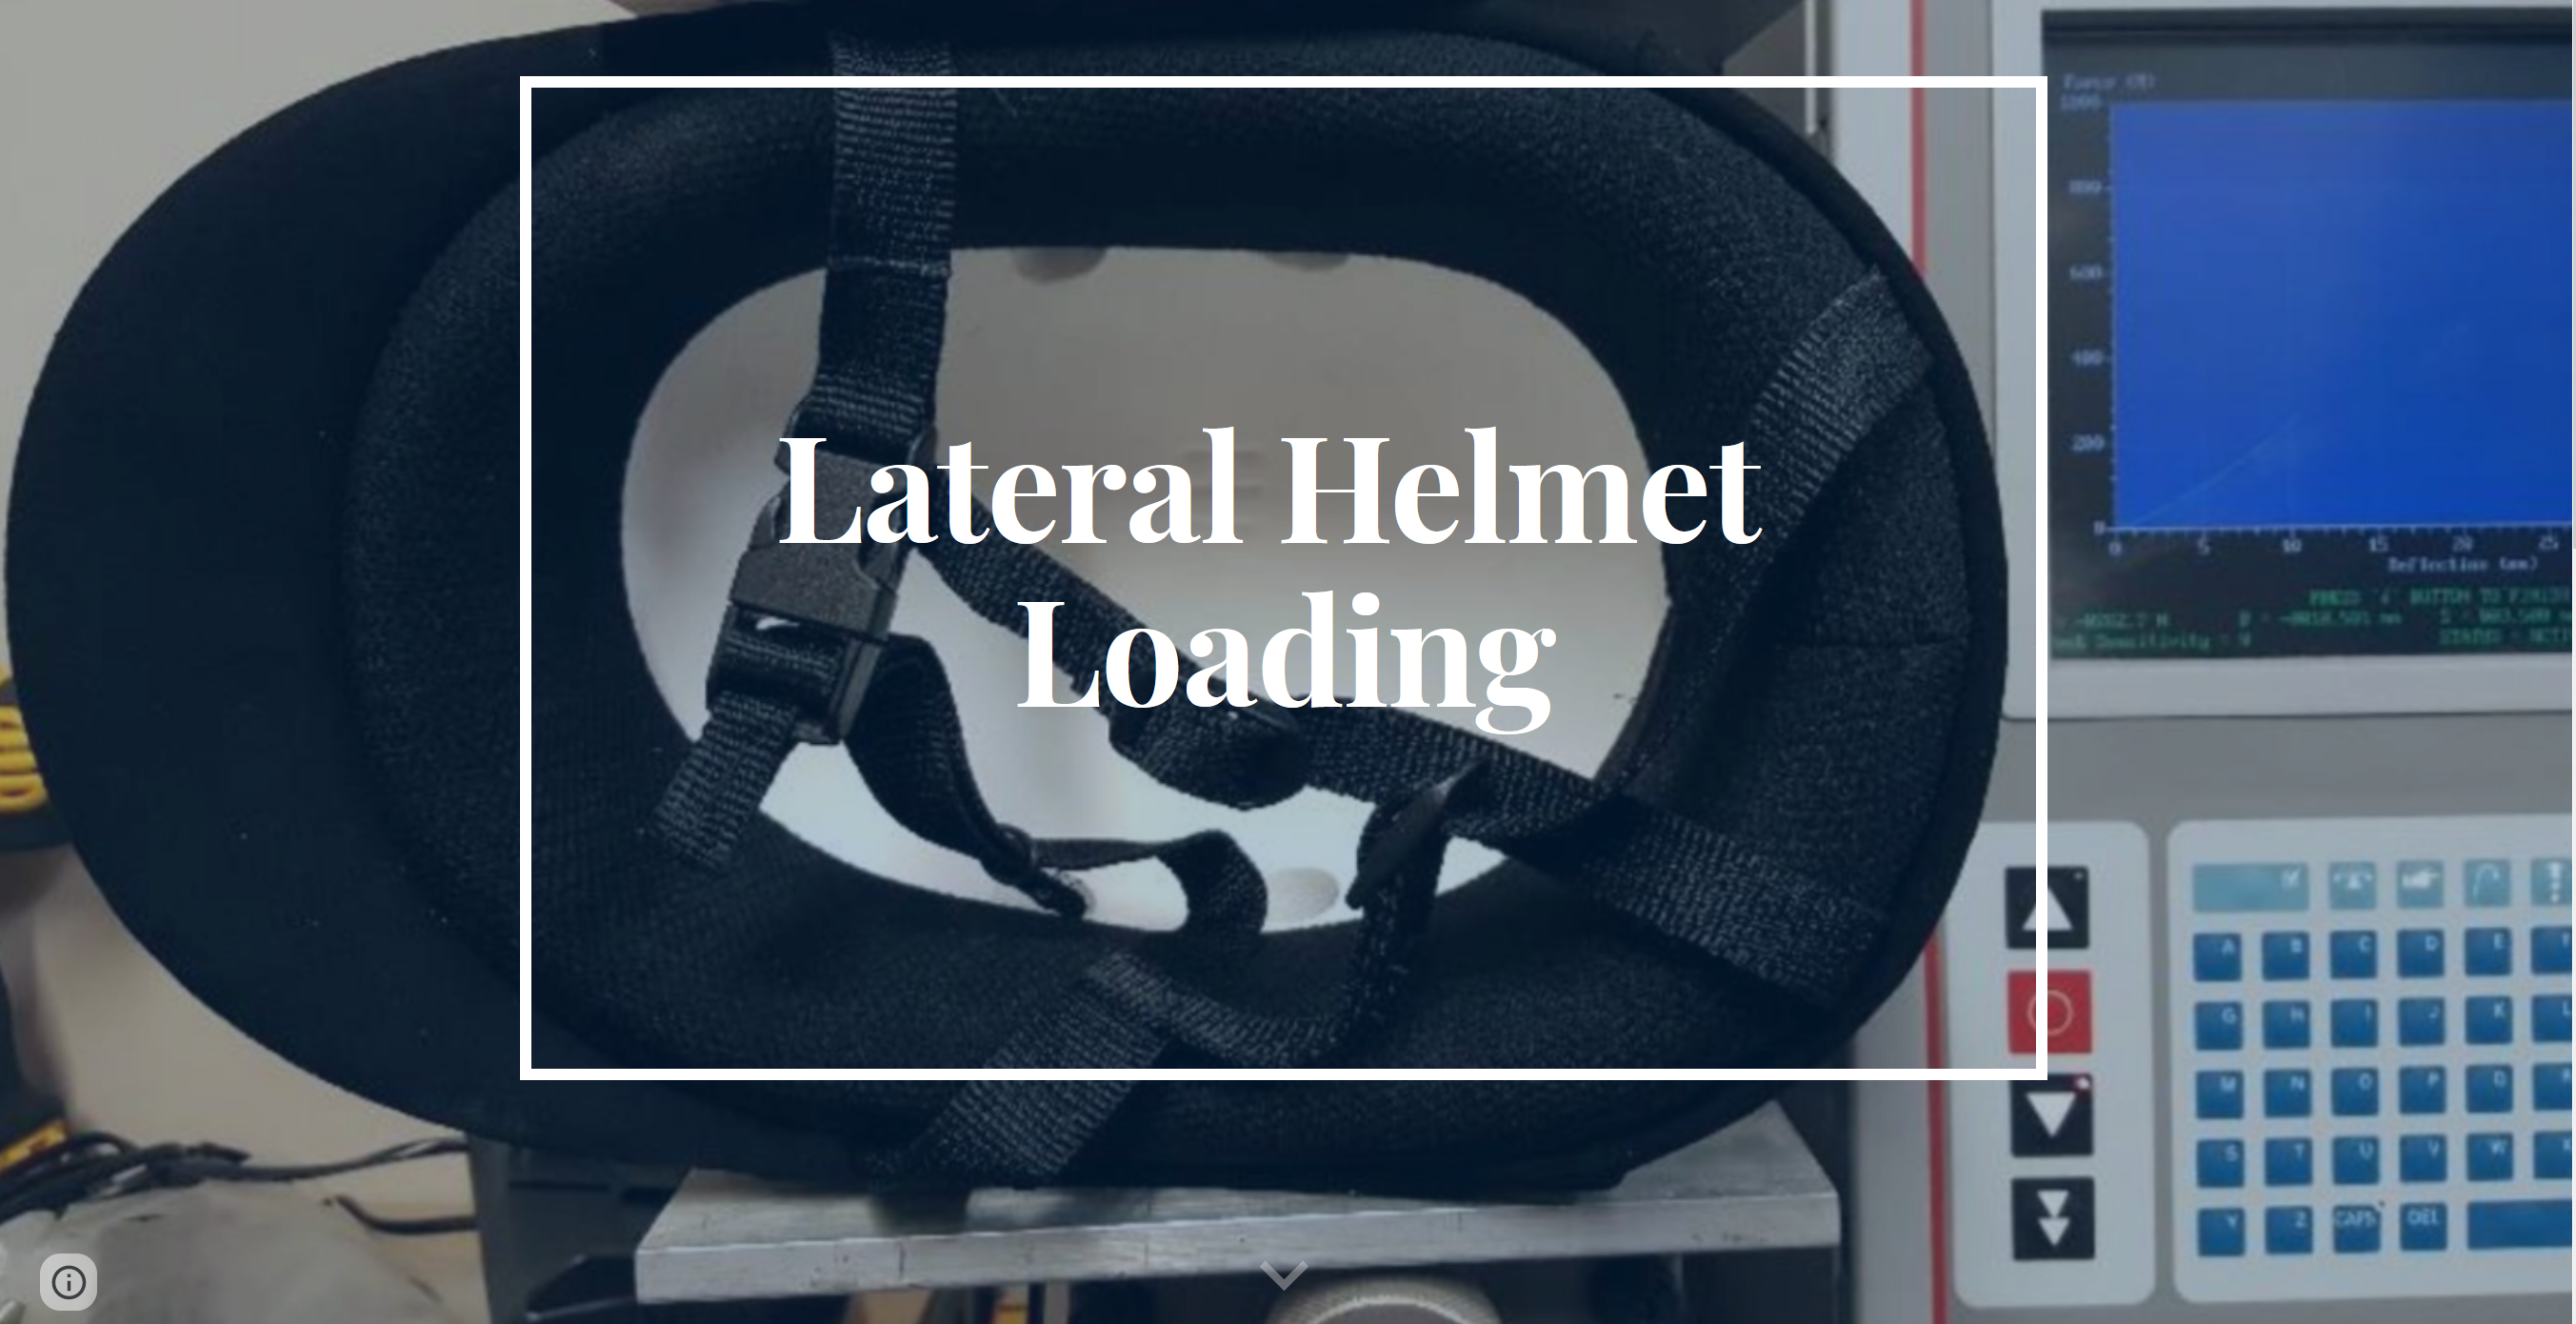 Lateral Helmet Loading team